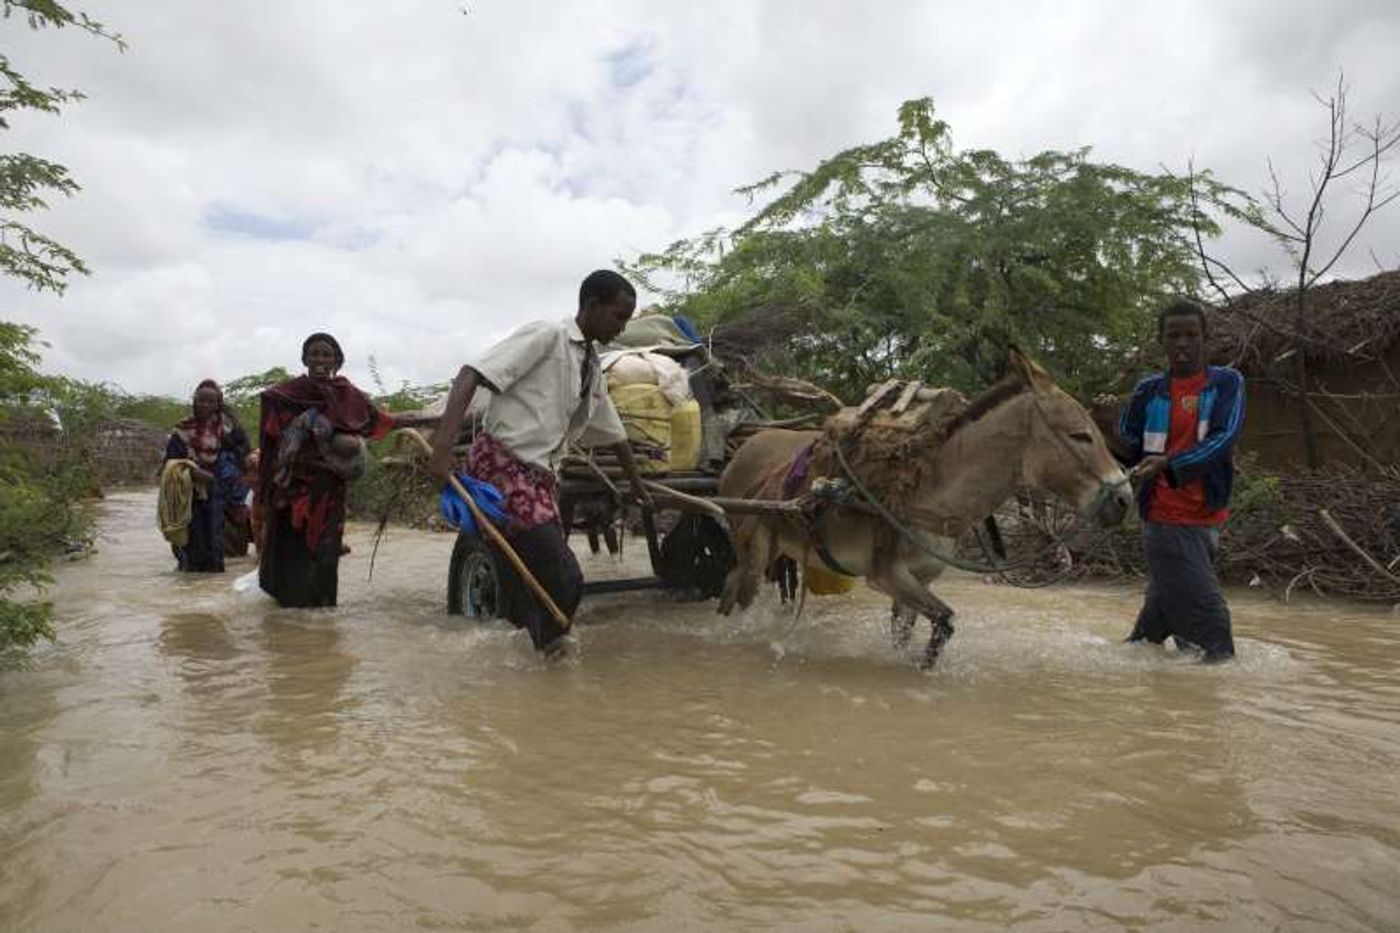 Somali refugees flee flooding in Dadaab, Kenya. Photo: UNHCR